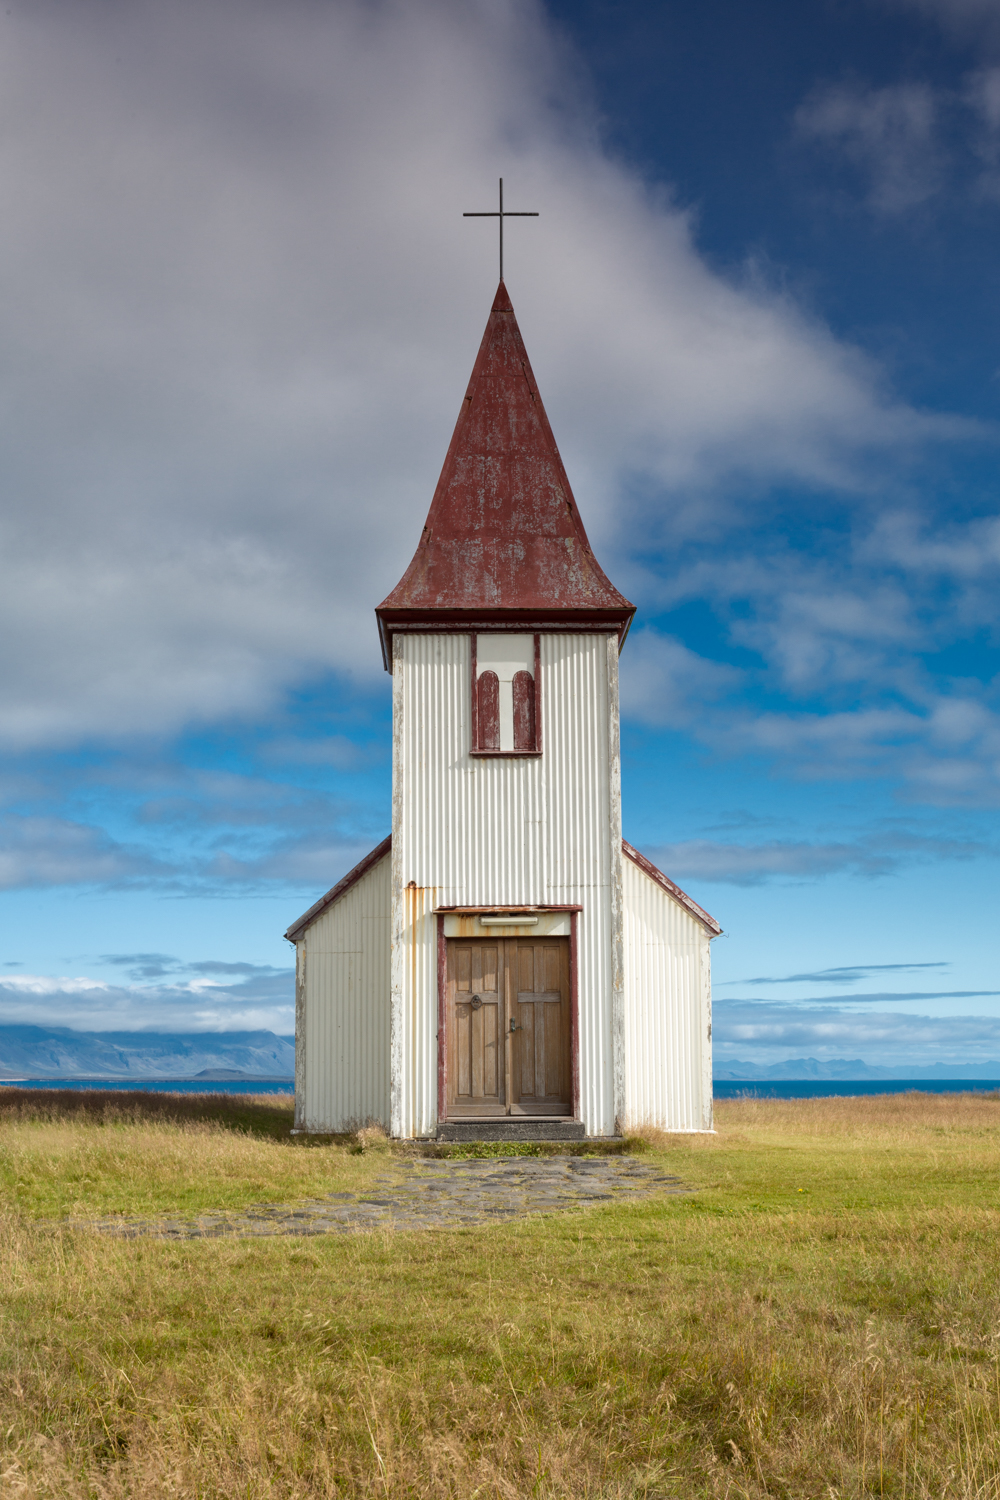 Fotografare le chiese islandesi www.ishoottravels.com your ticket to travel photography. Blog di fotografia di viaggi. © Galli / Trevisan